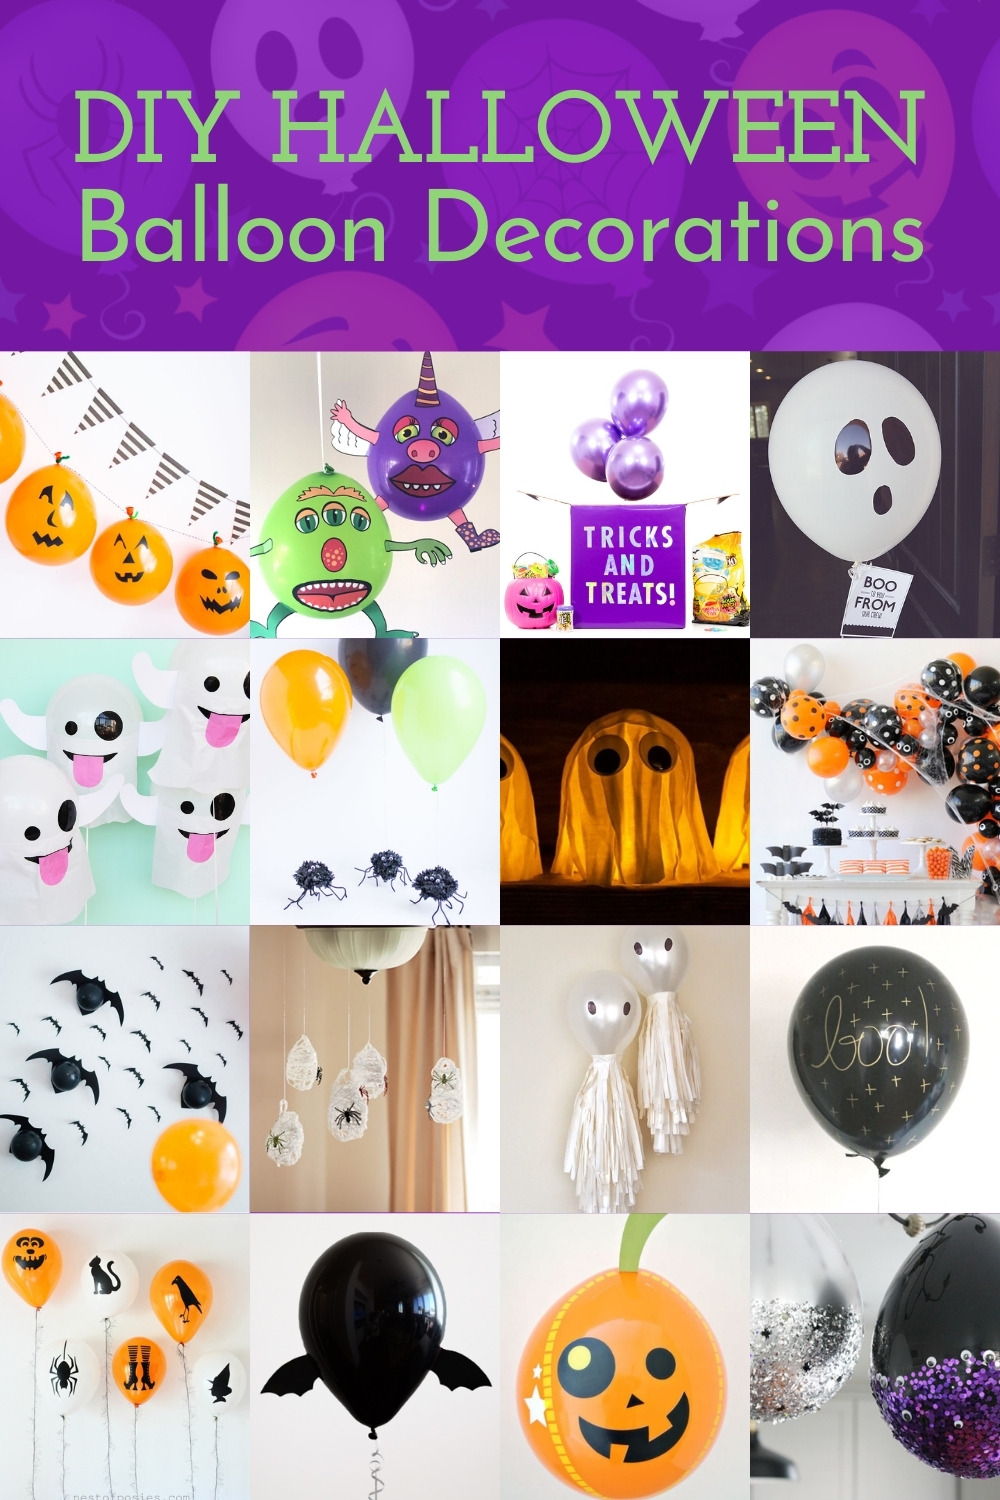 DIY Halloween Balloon Decorations